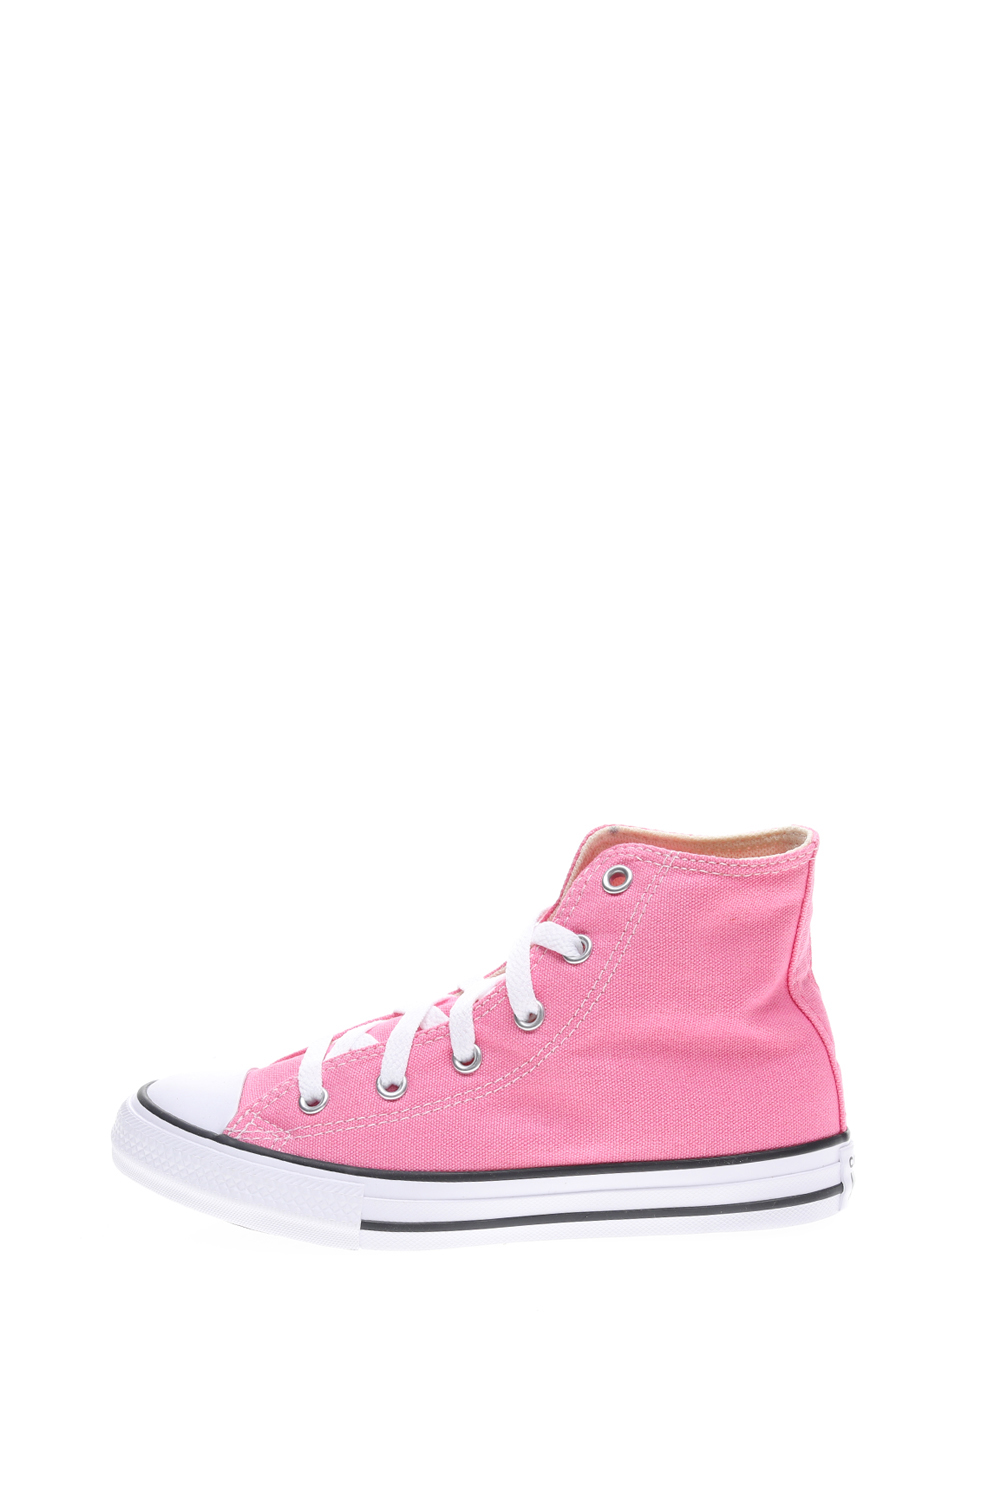 CONVERSE - Παιδικά μποτάκια Chuck Taylor ροζ Παιδικά/Girls/Παπούτσια/Sneakers